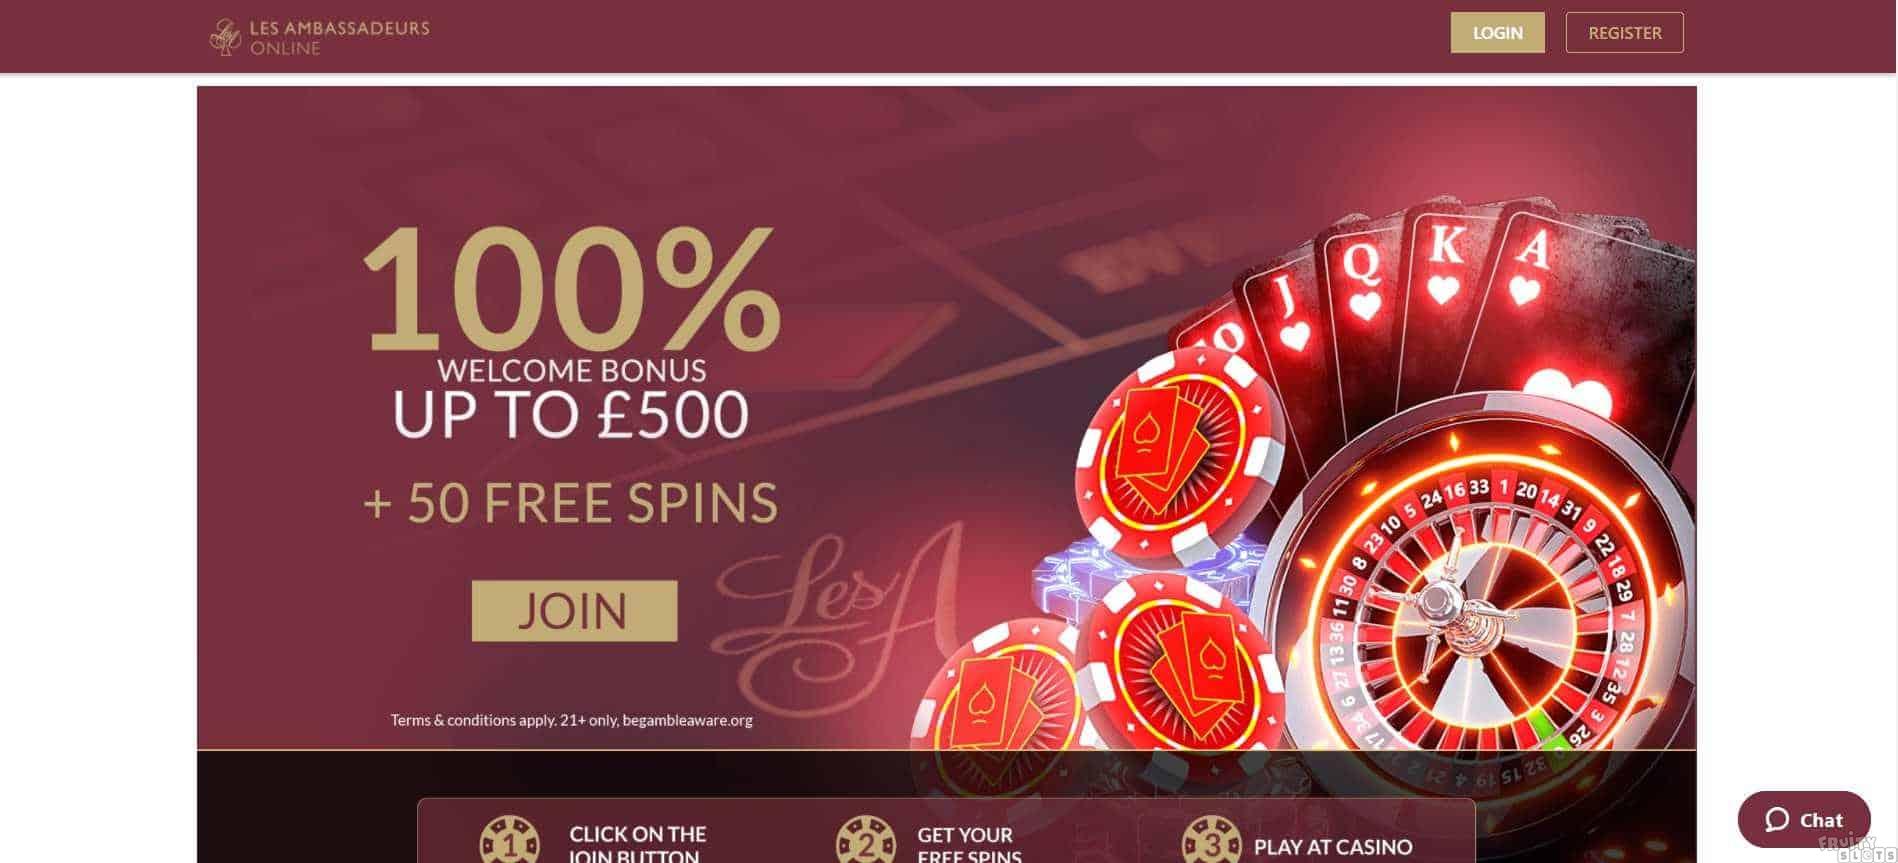 Les Ambassaduers Online Casino Home